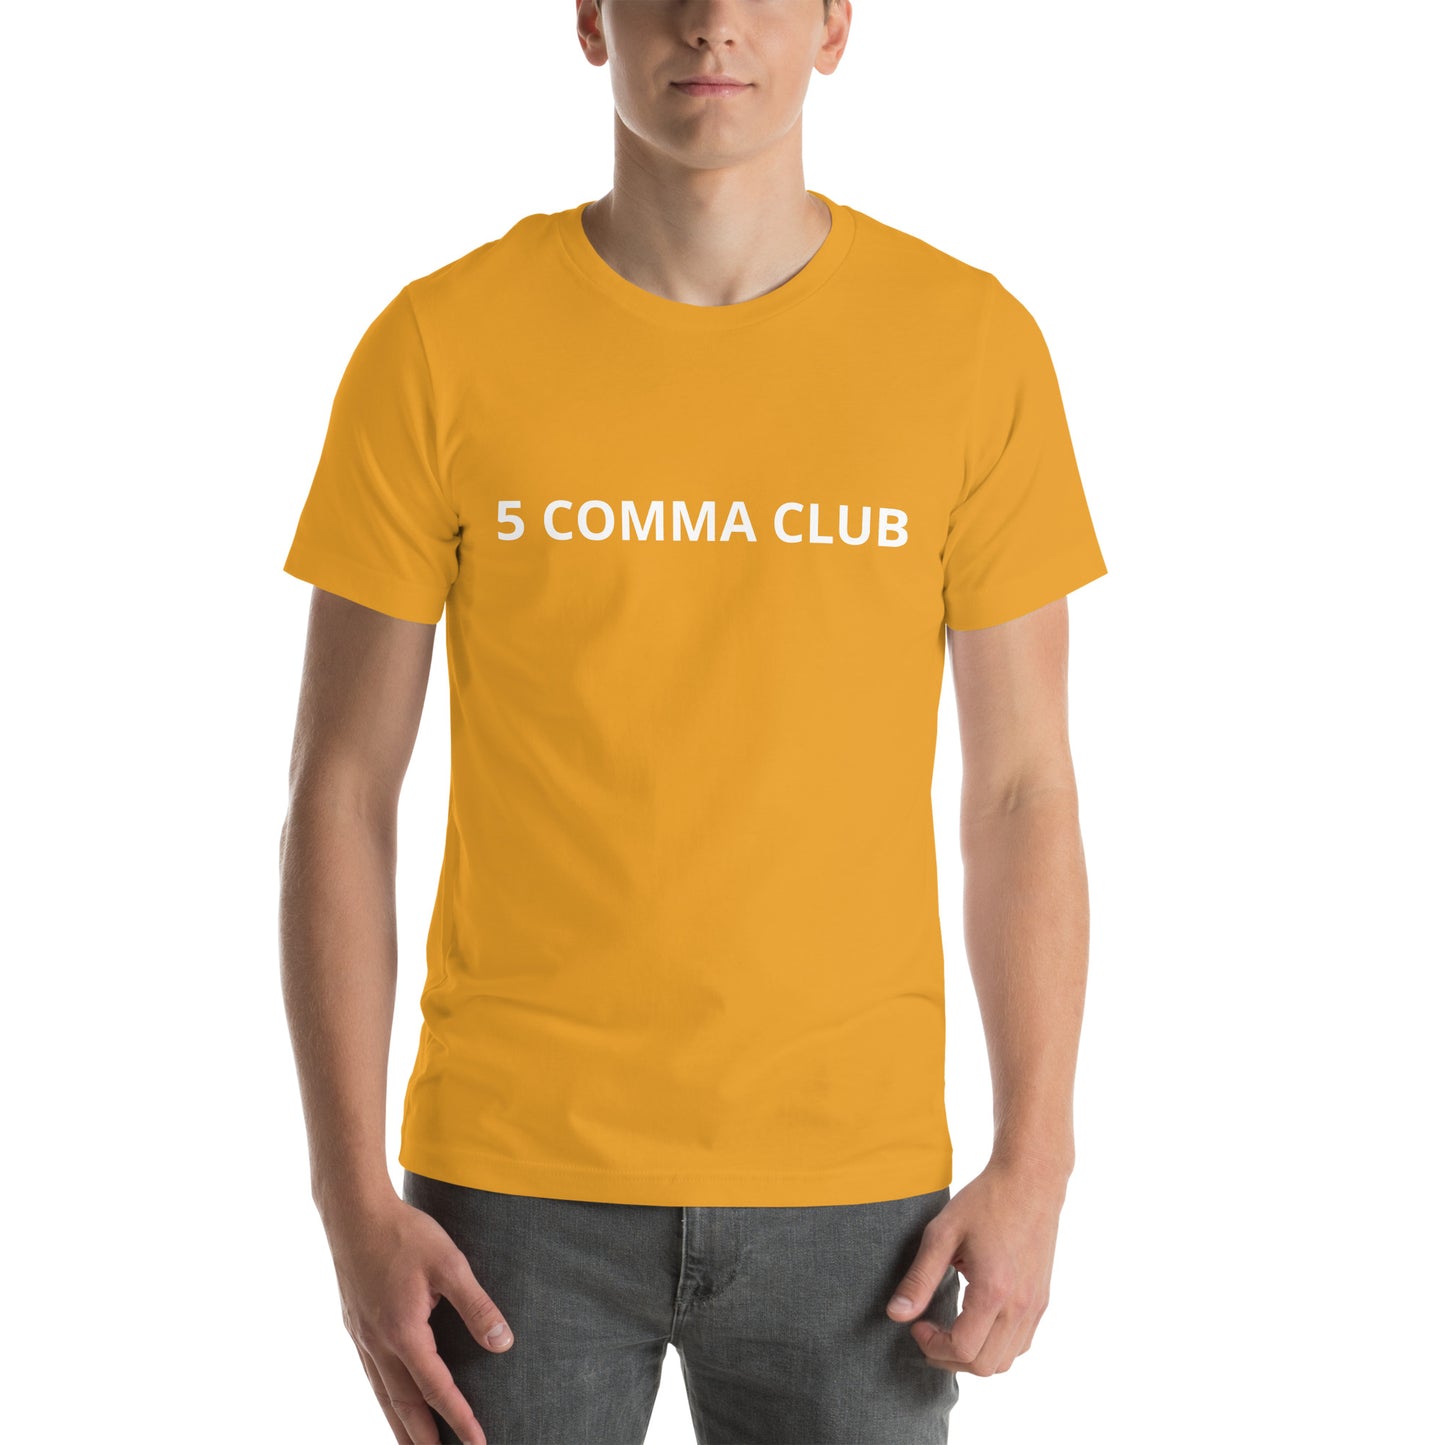 5 COMMA CLUB  Unisex t-shirt